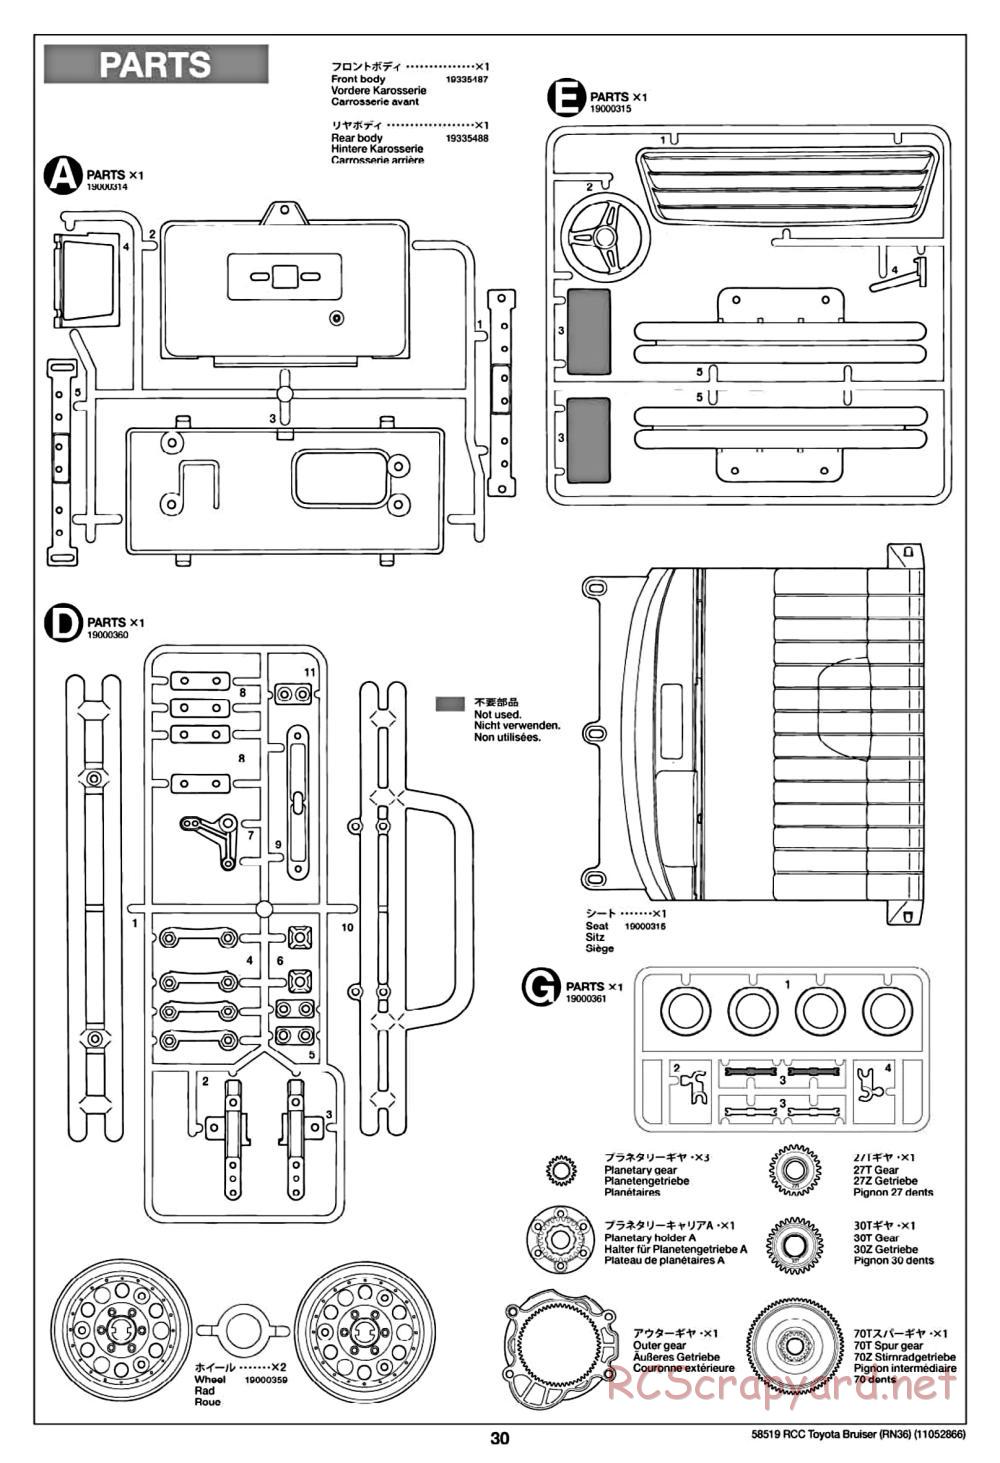 Tamiya - Toyota 4x4 Pick Up Bruiser Chassis - Manual - Page 30